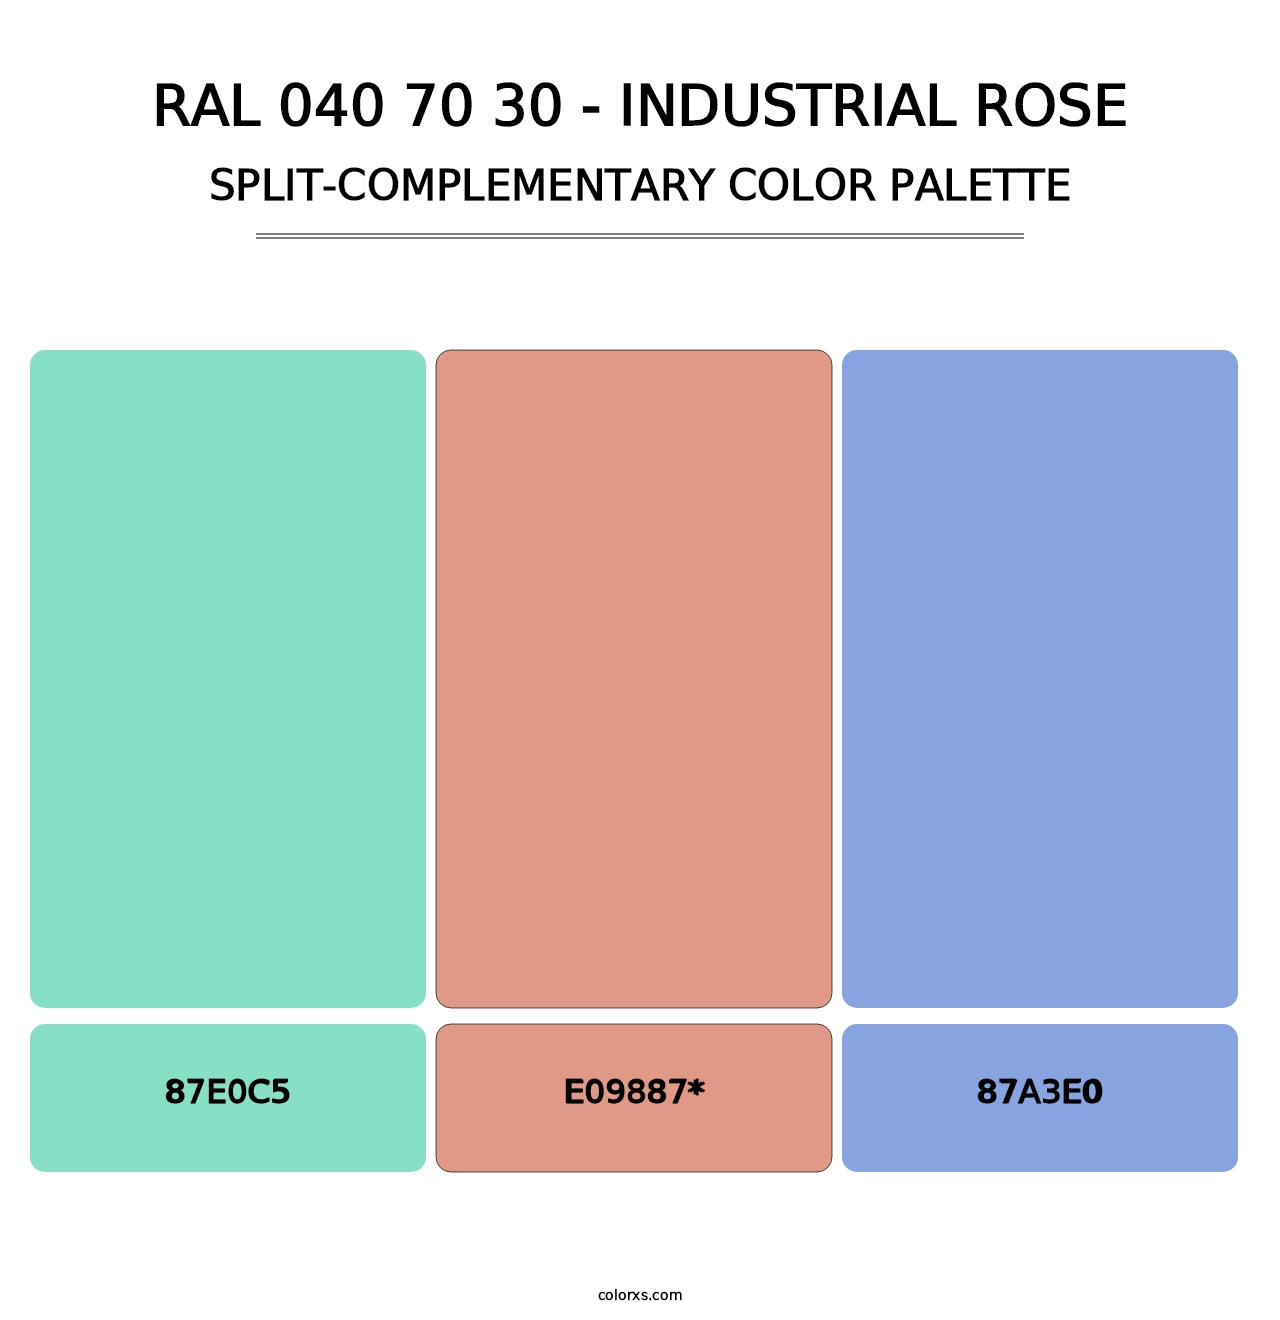 RAL 040 70 30 - Industrial Rose - Split-Complementary Color Palette